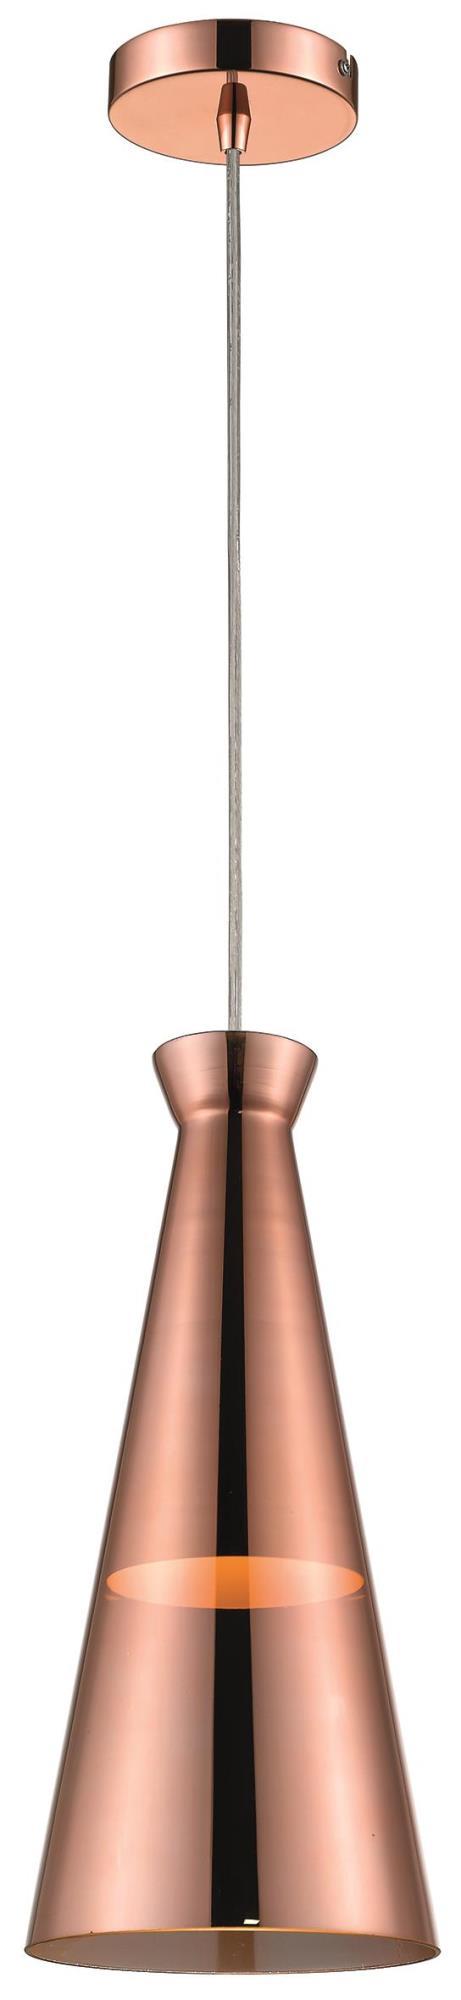 Stylish Lighting Derby Copper Glass Pendant Light